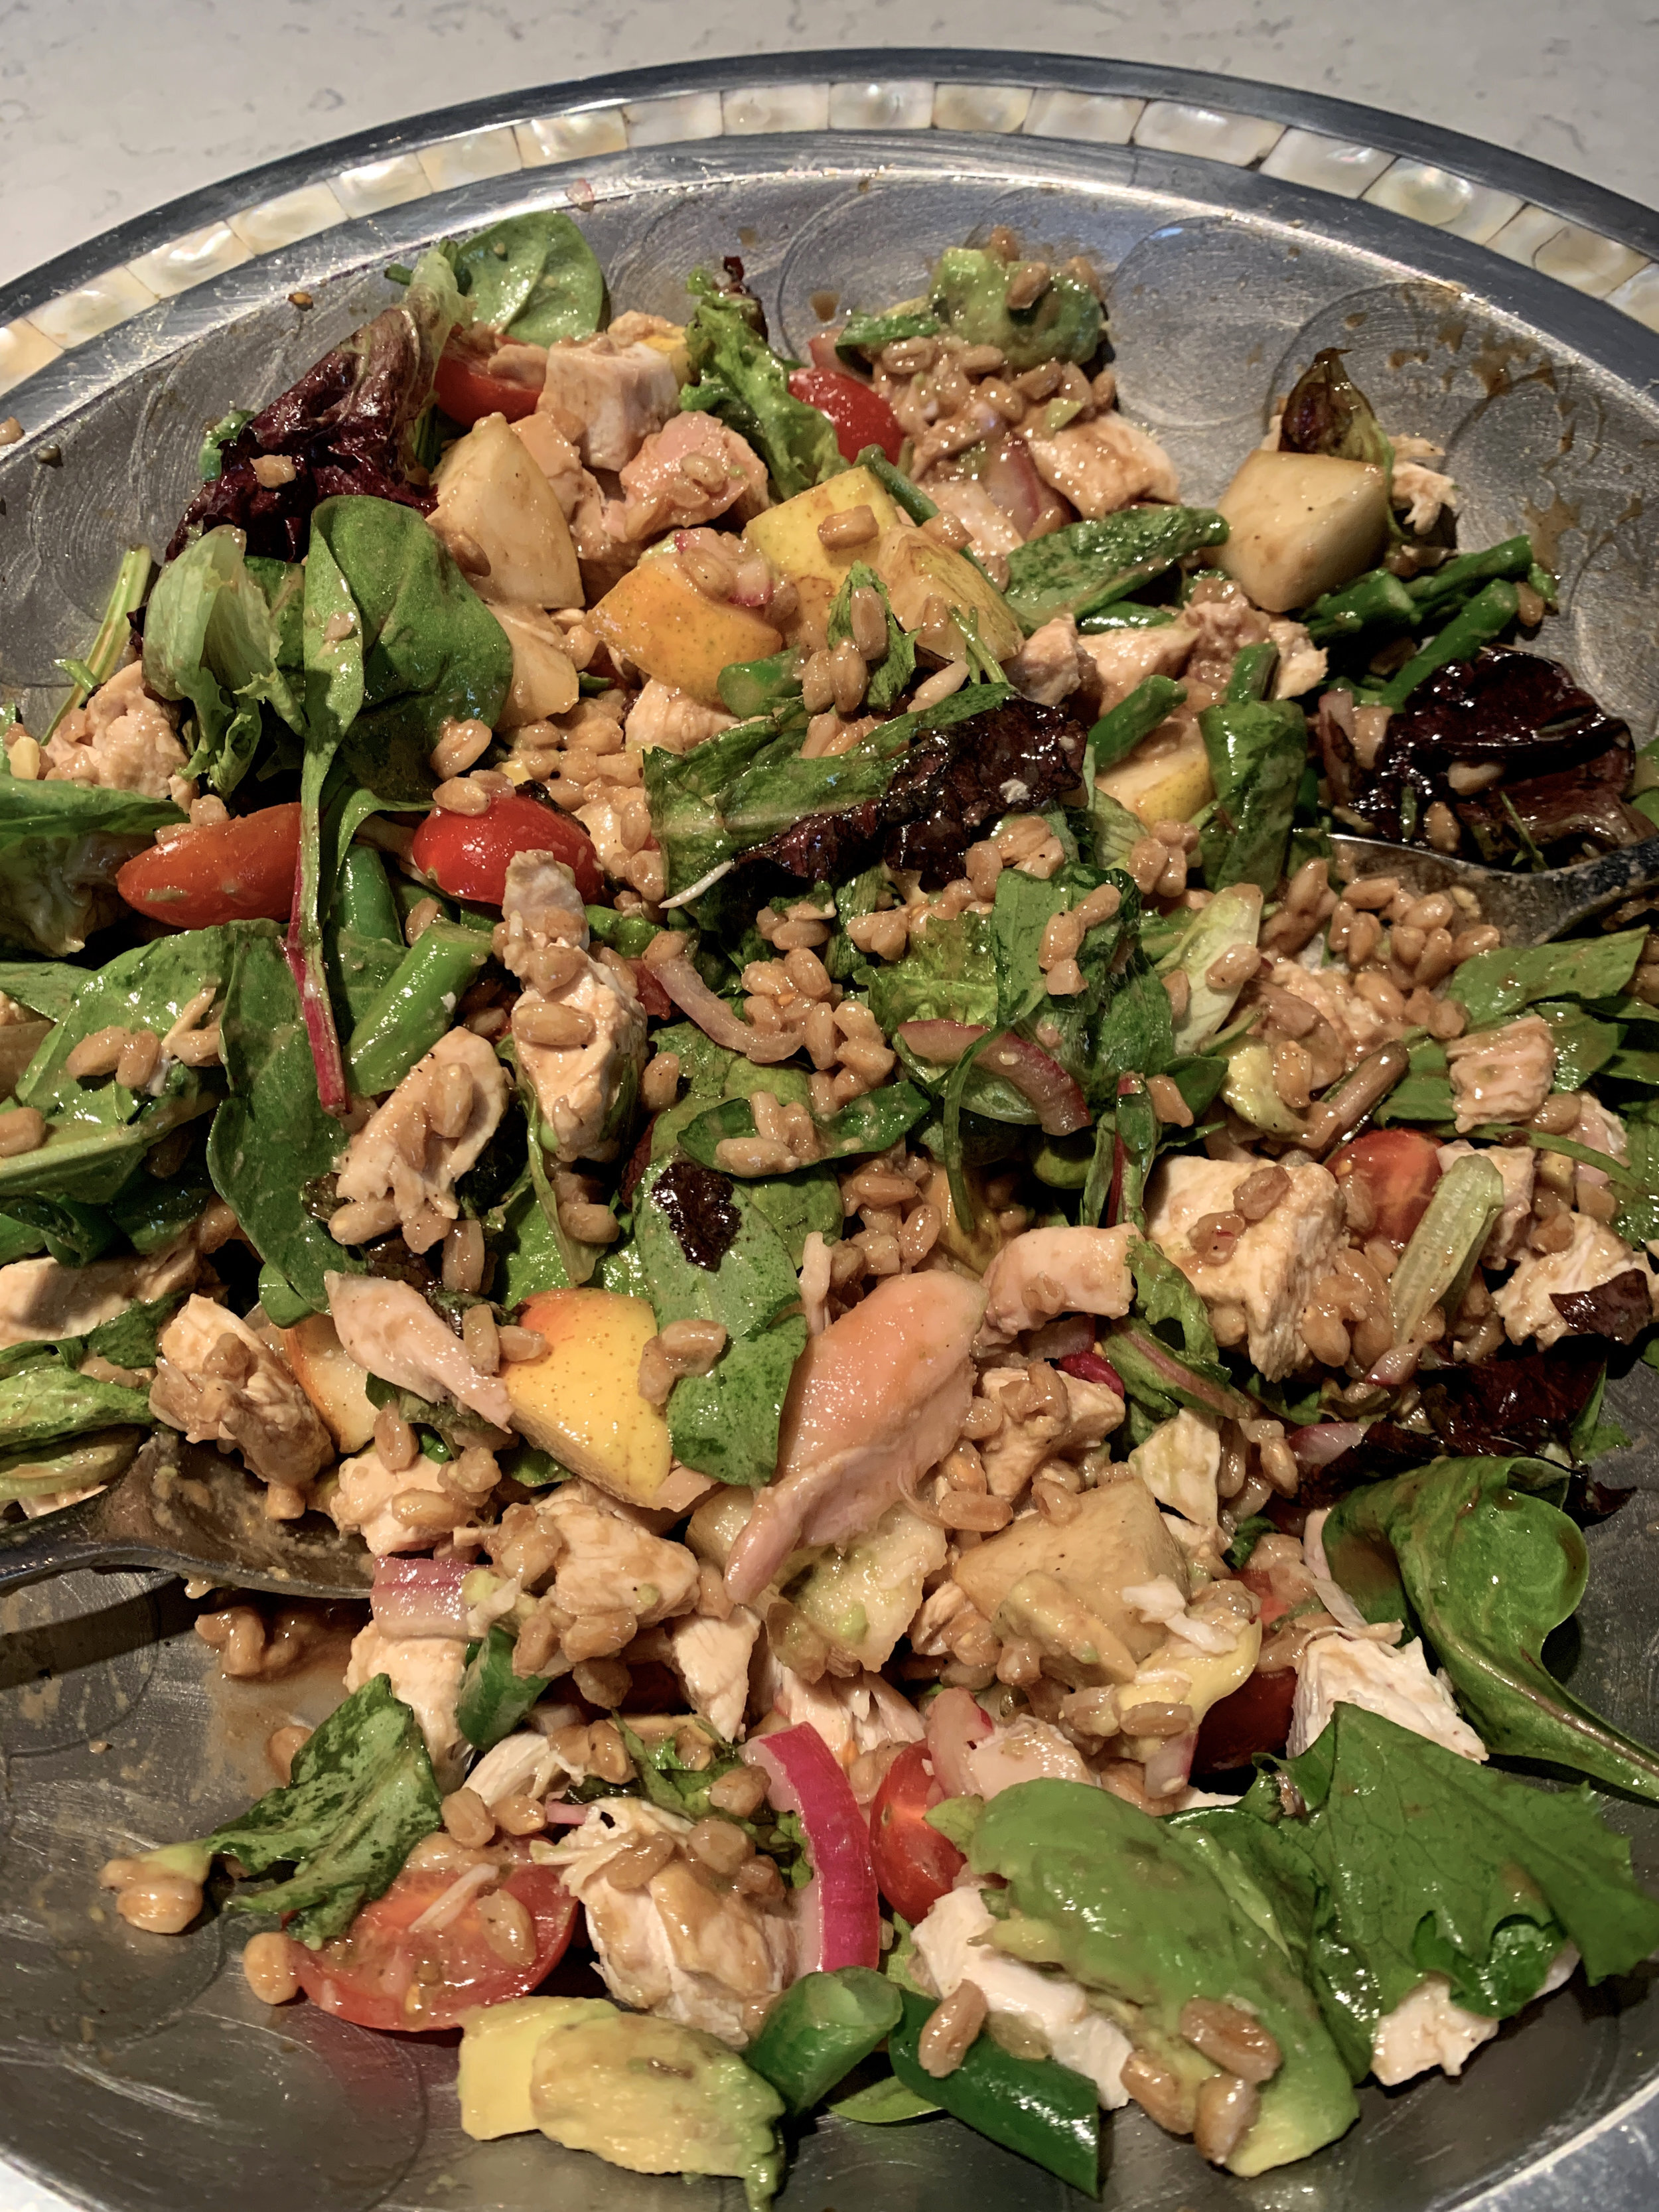 Chicken, Farro, and Vegetable Salad with Balsamic Vinaigrette